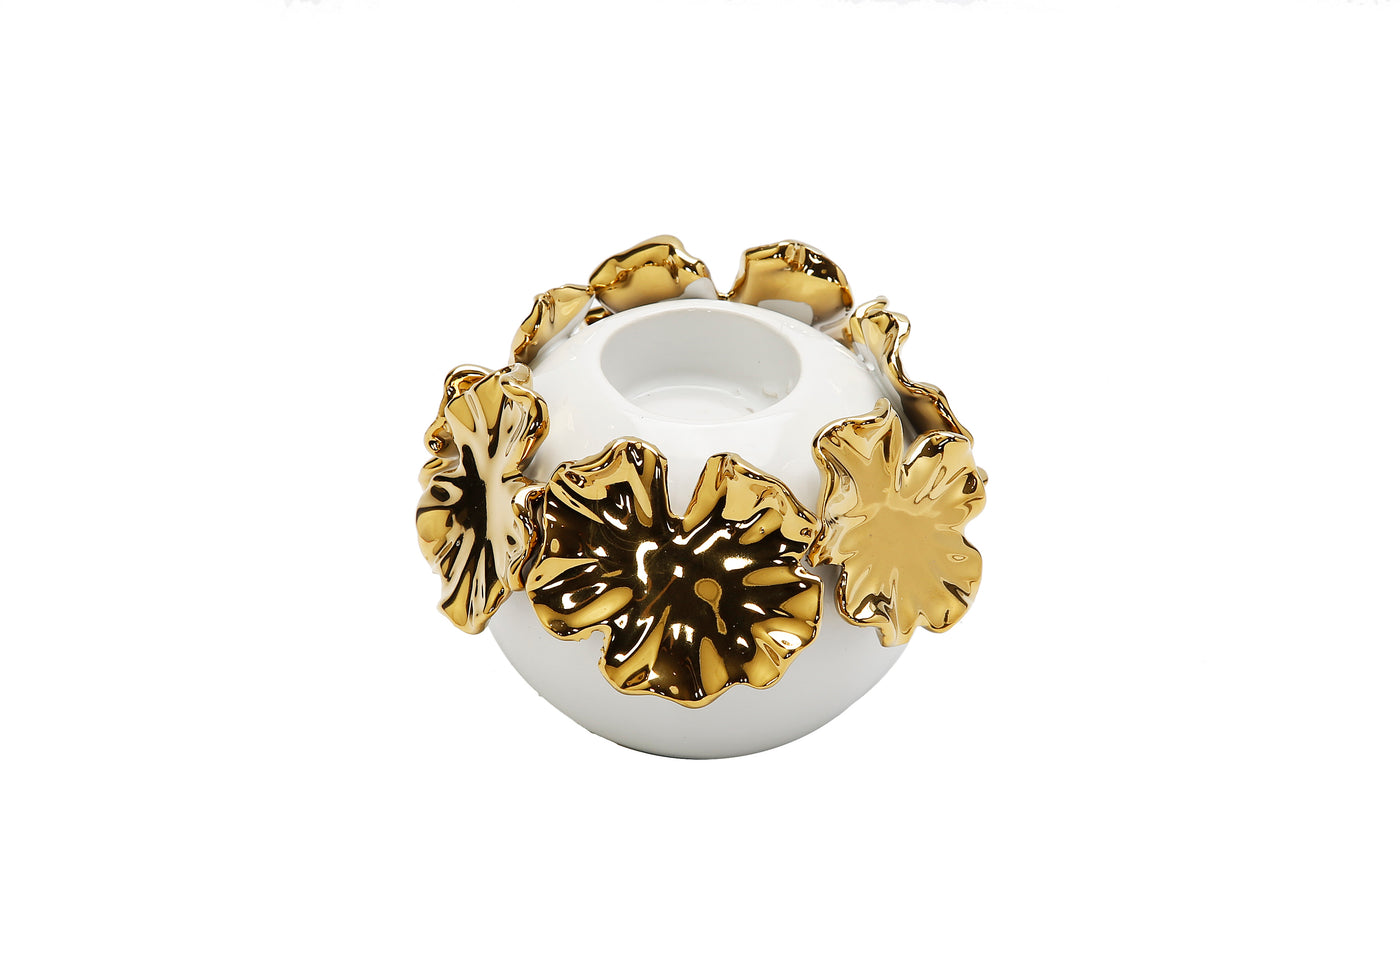 White Ceramic Candle Holder Gold Flower Design